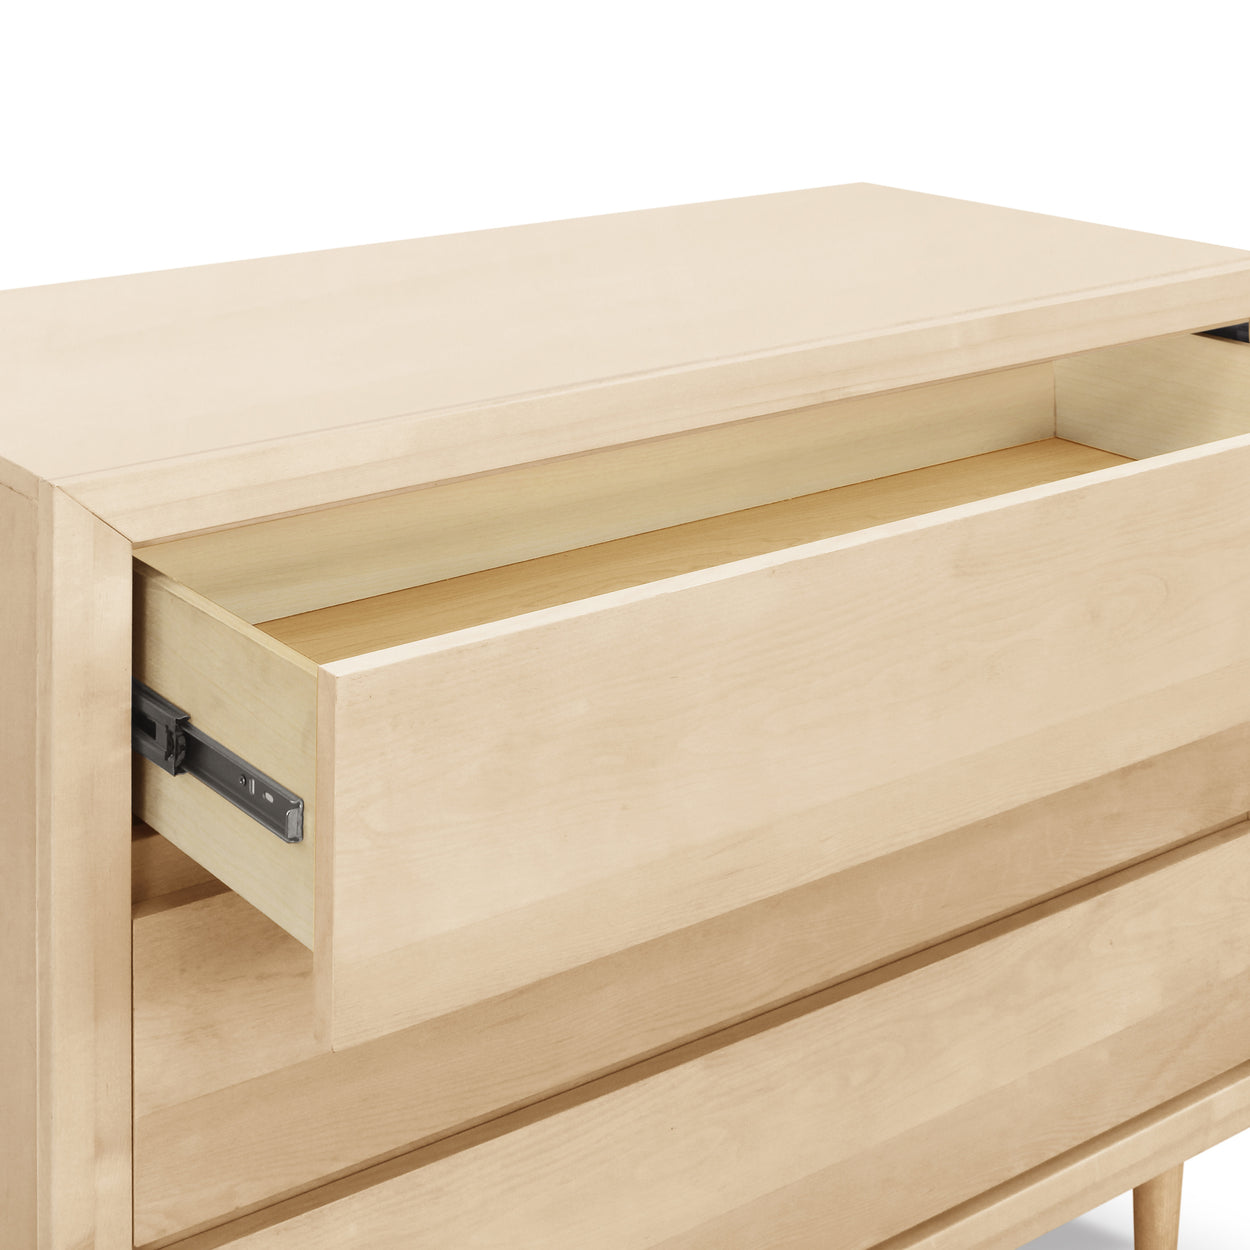 UB0320BR,Nifty 3-Drawer Dresser in Natural Birch